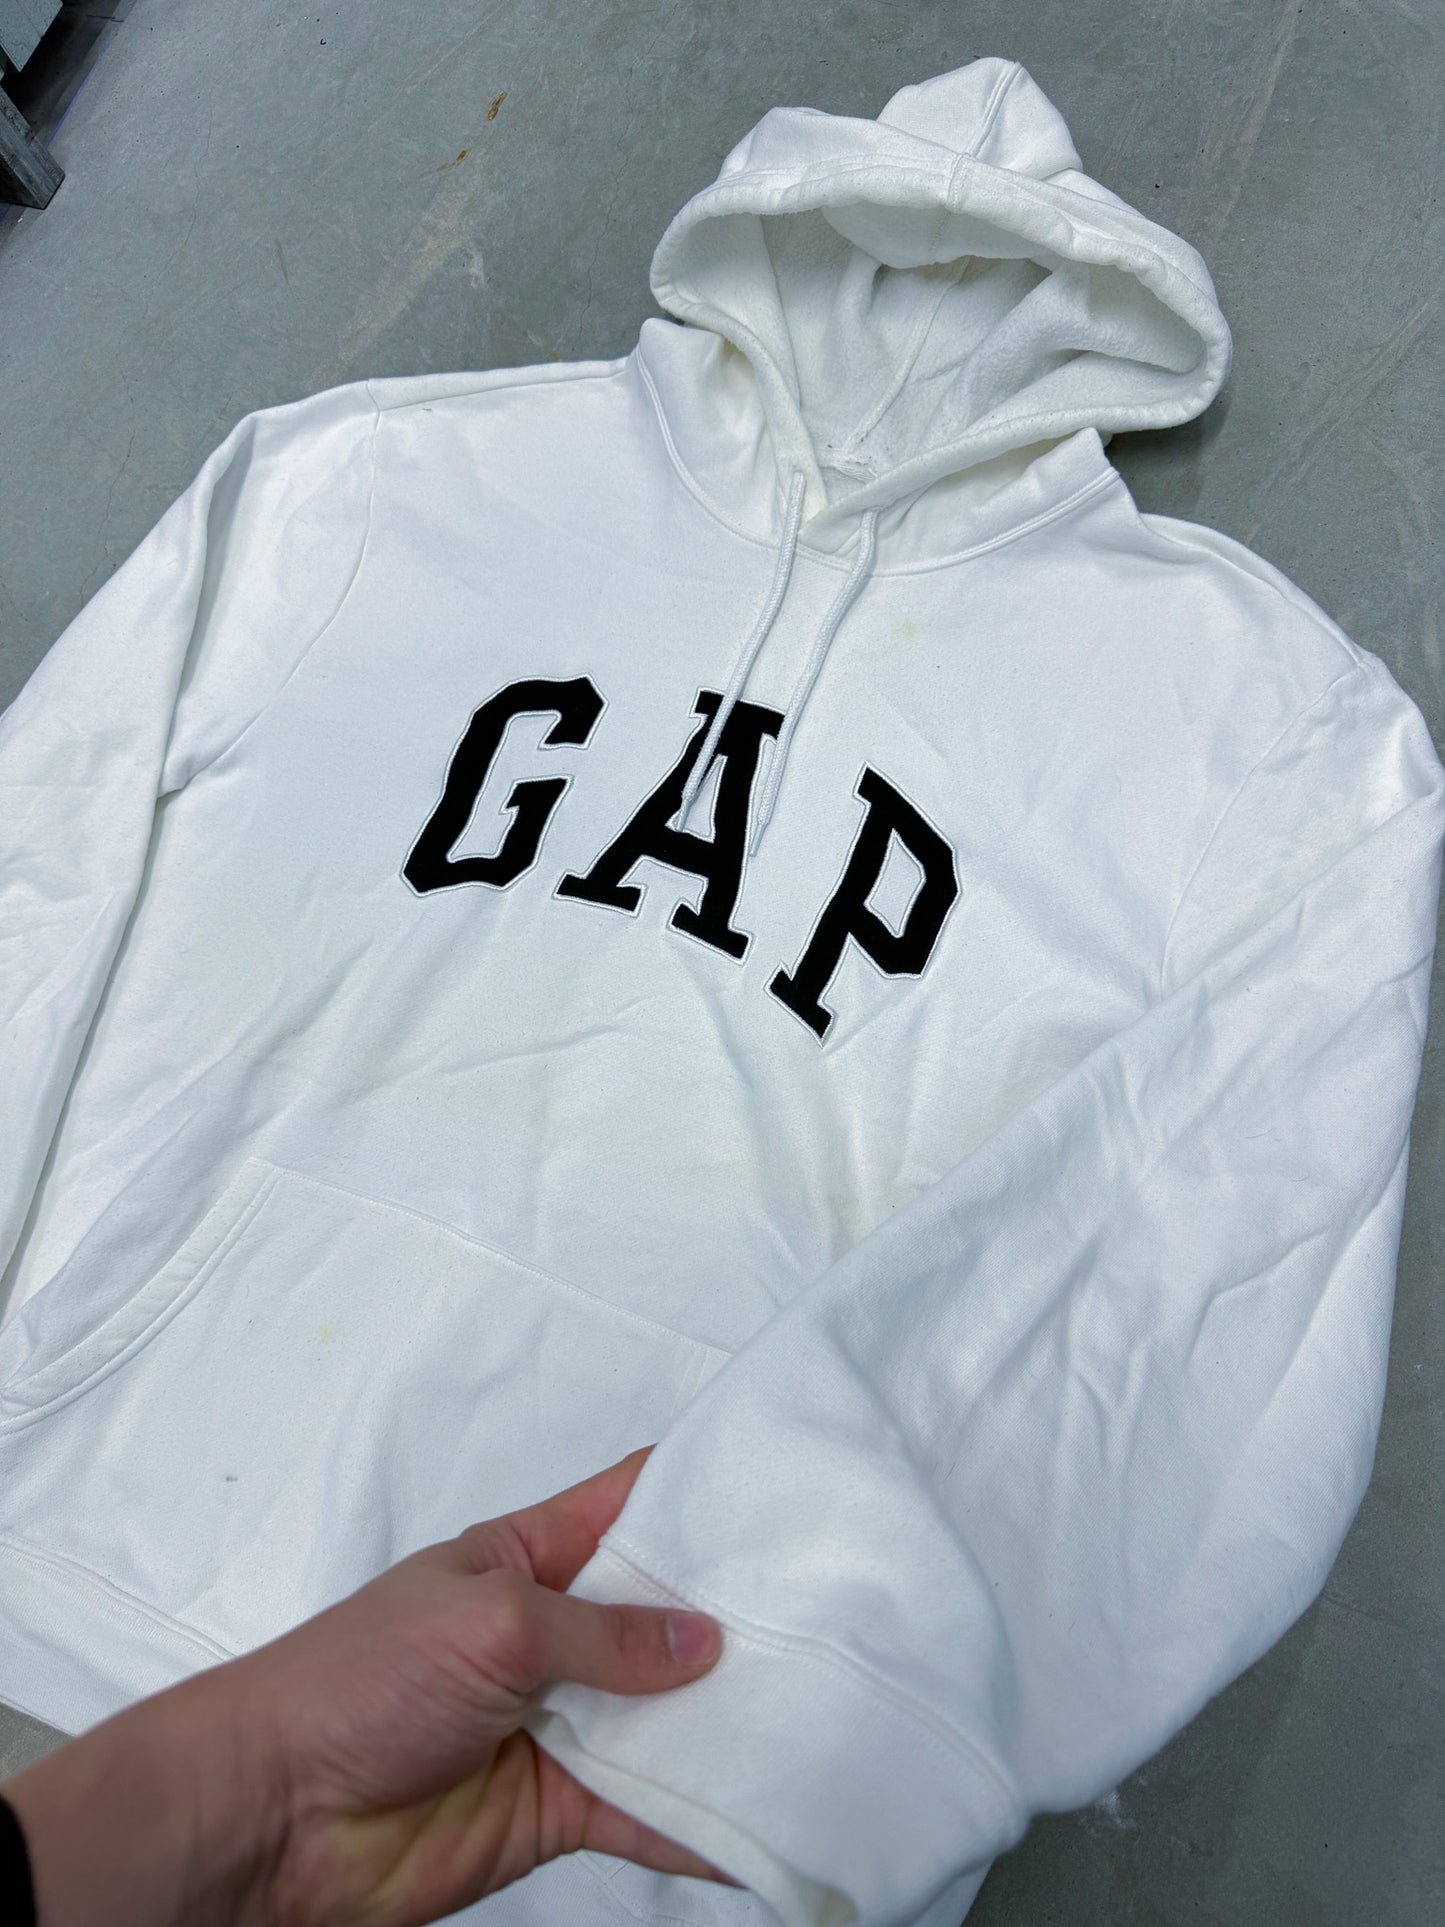 Gap Vintage Pullover | XL